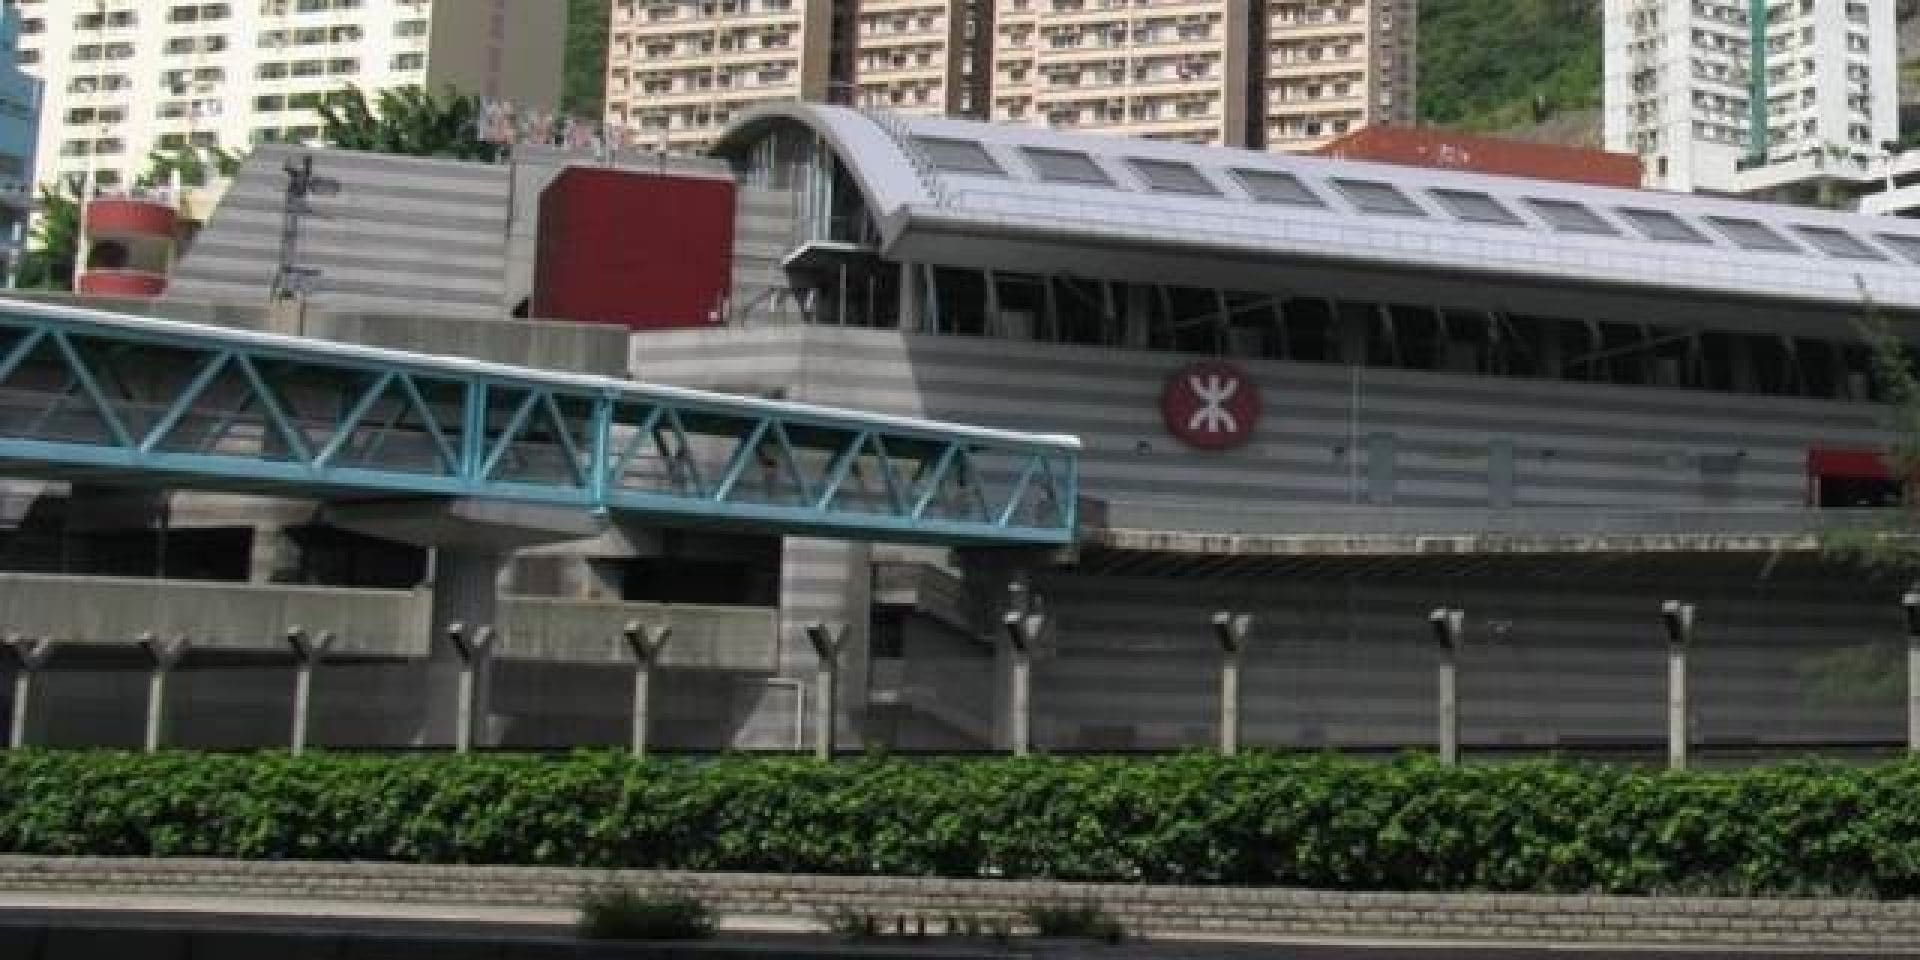 Hilti jobsite reference MTR metro Hong Kong